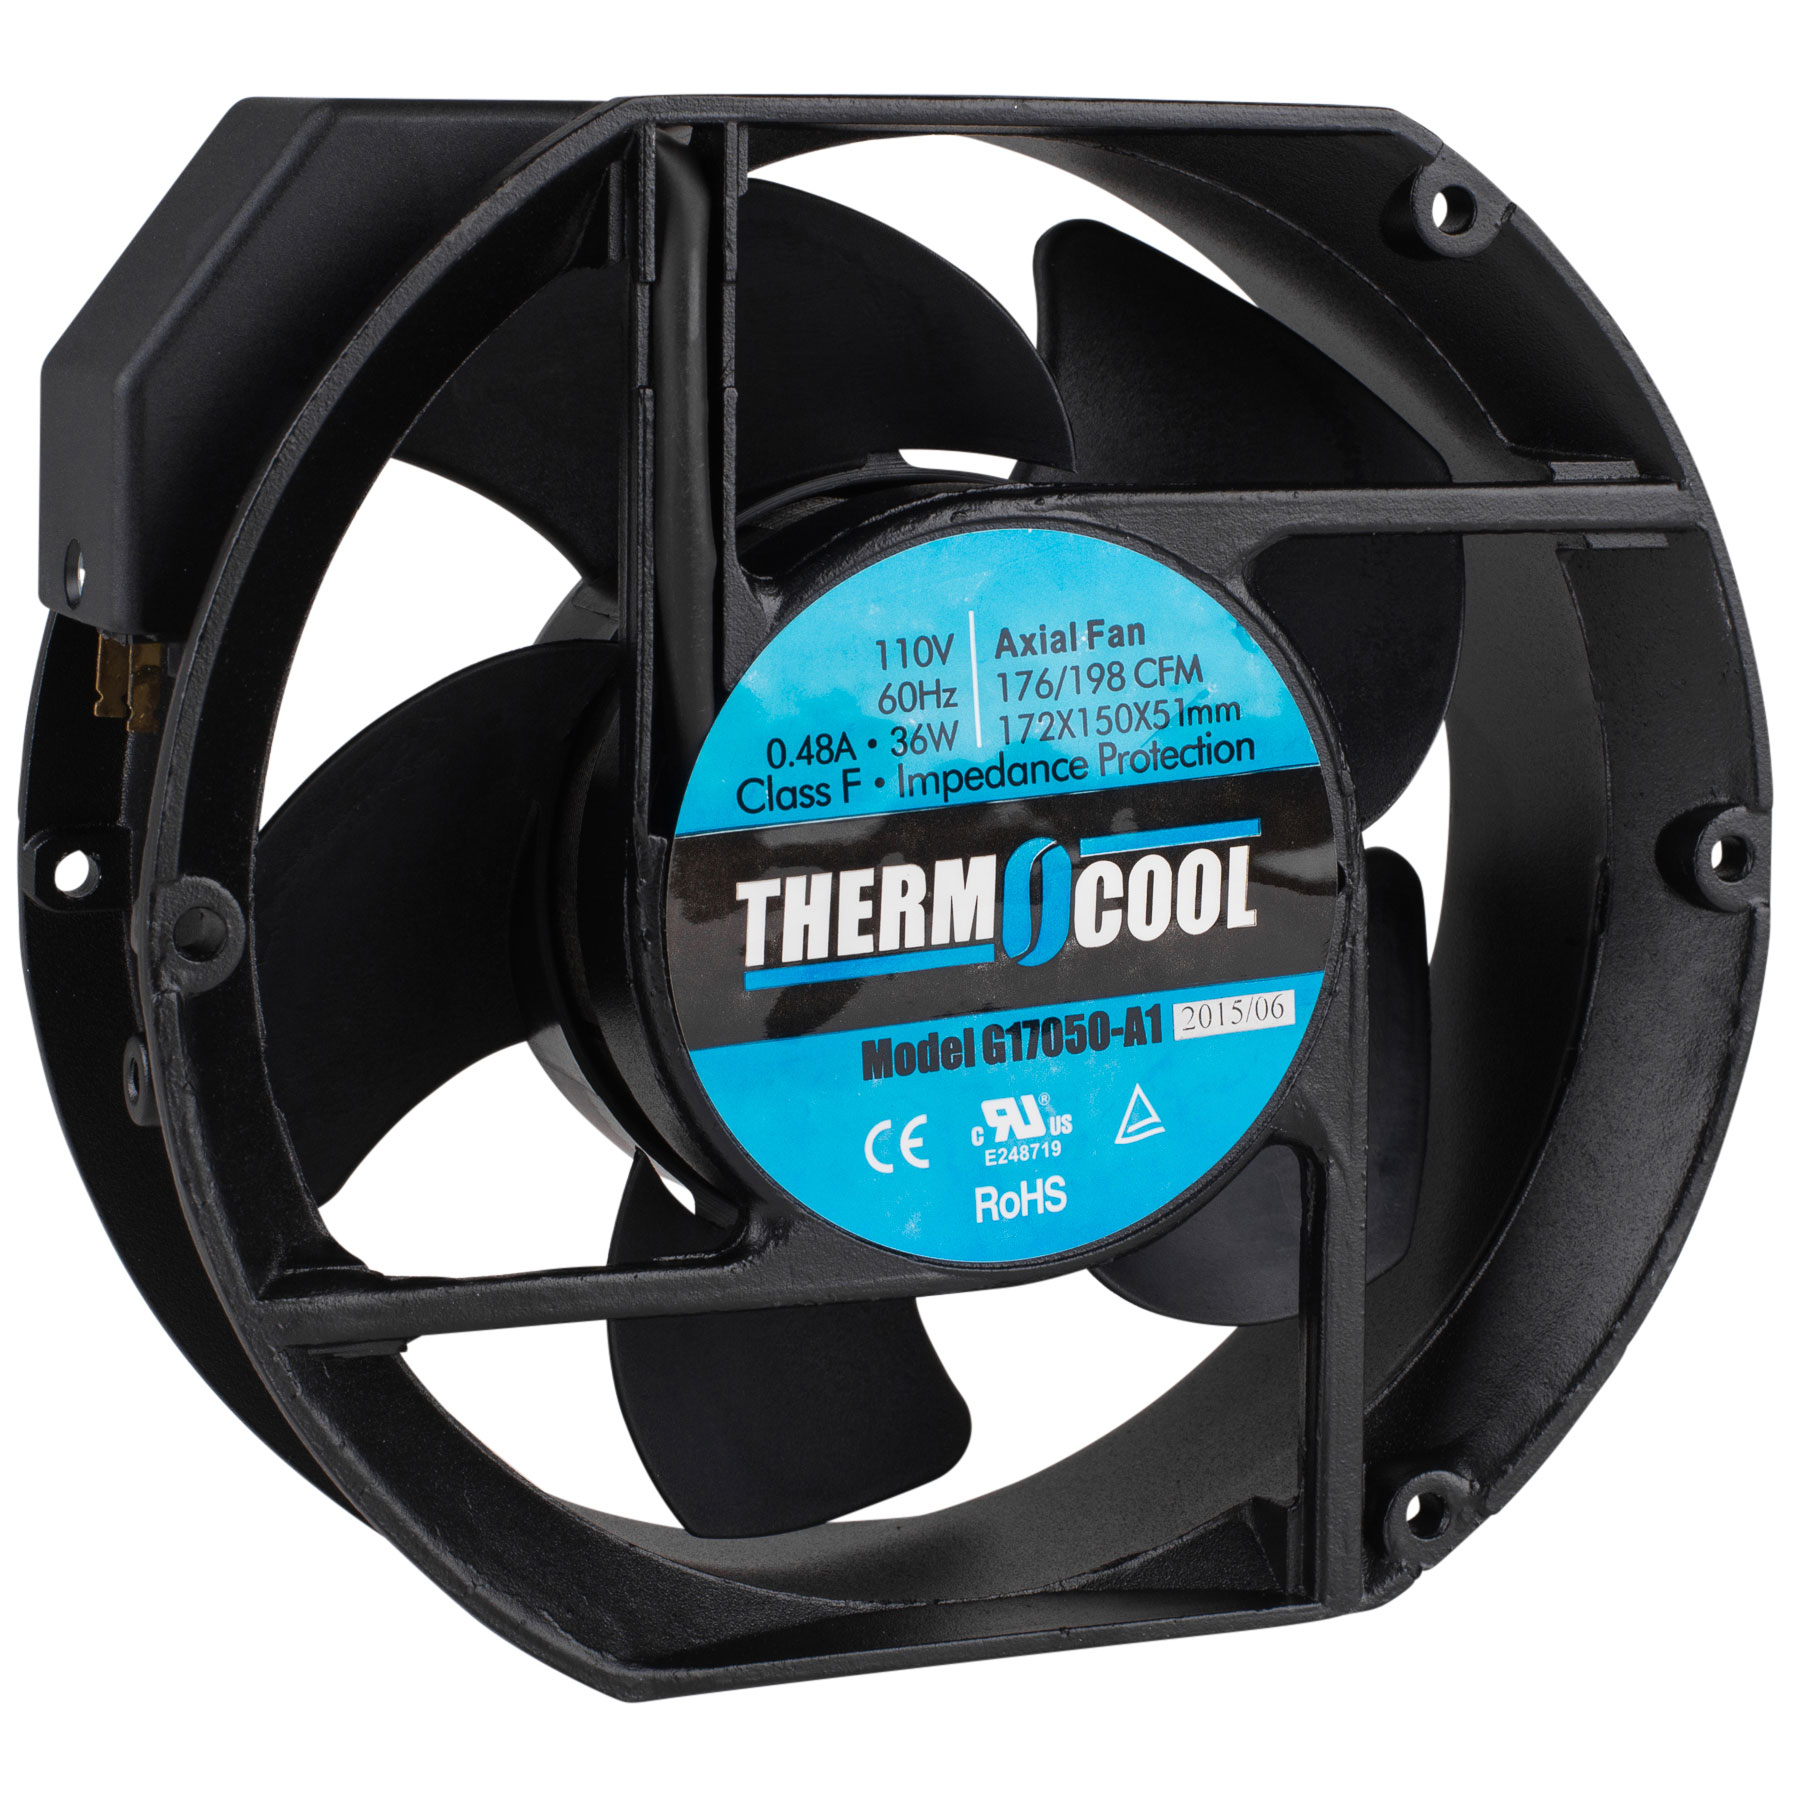 Thermocool 110 VAC Equipment Cooling Fan 172 x 150 x 51mm Ball ...